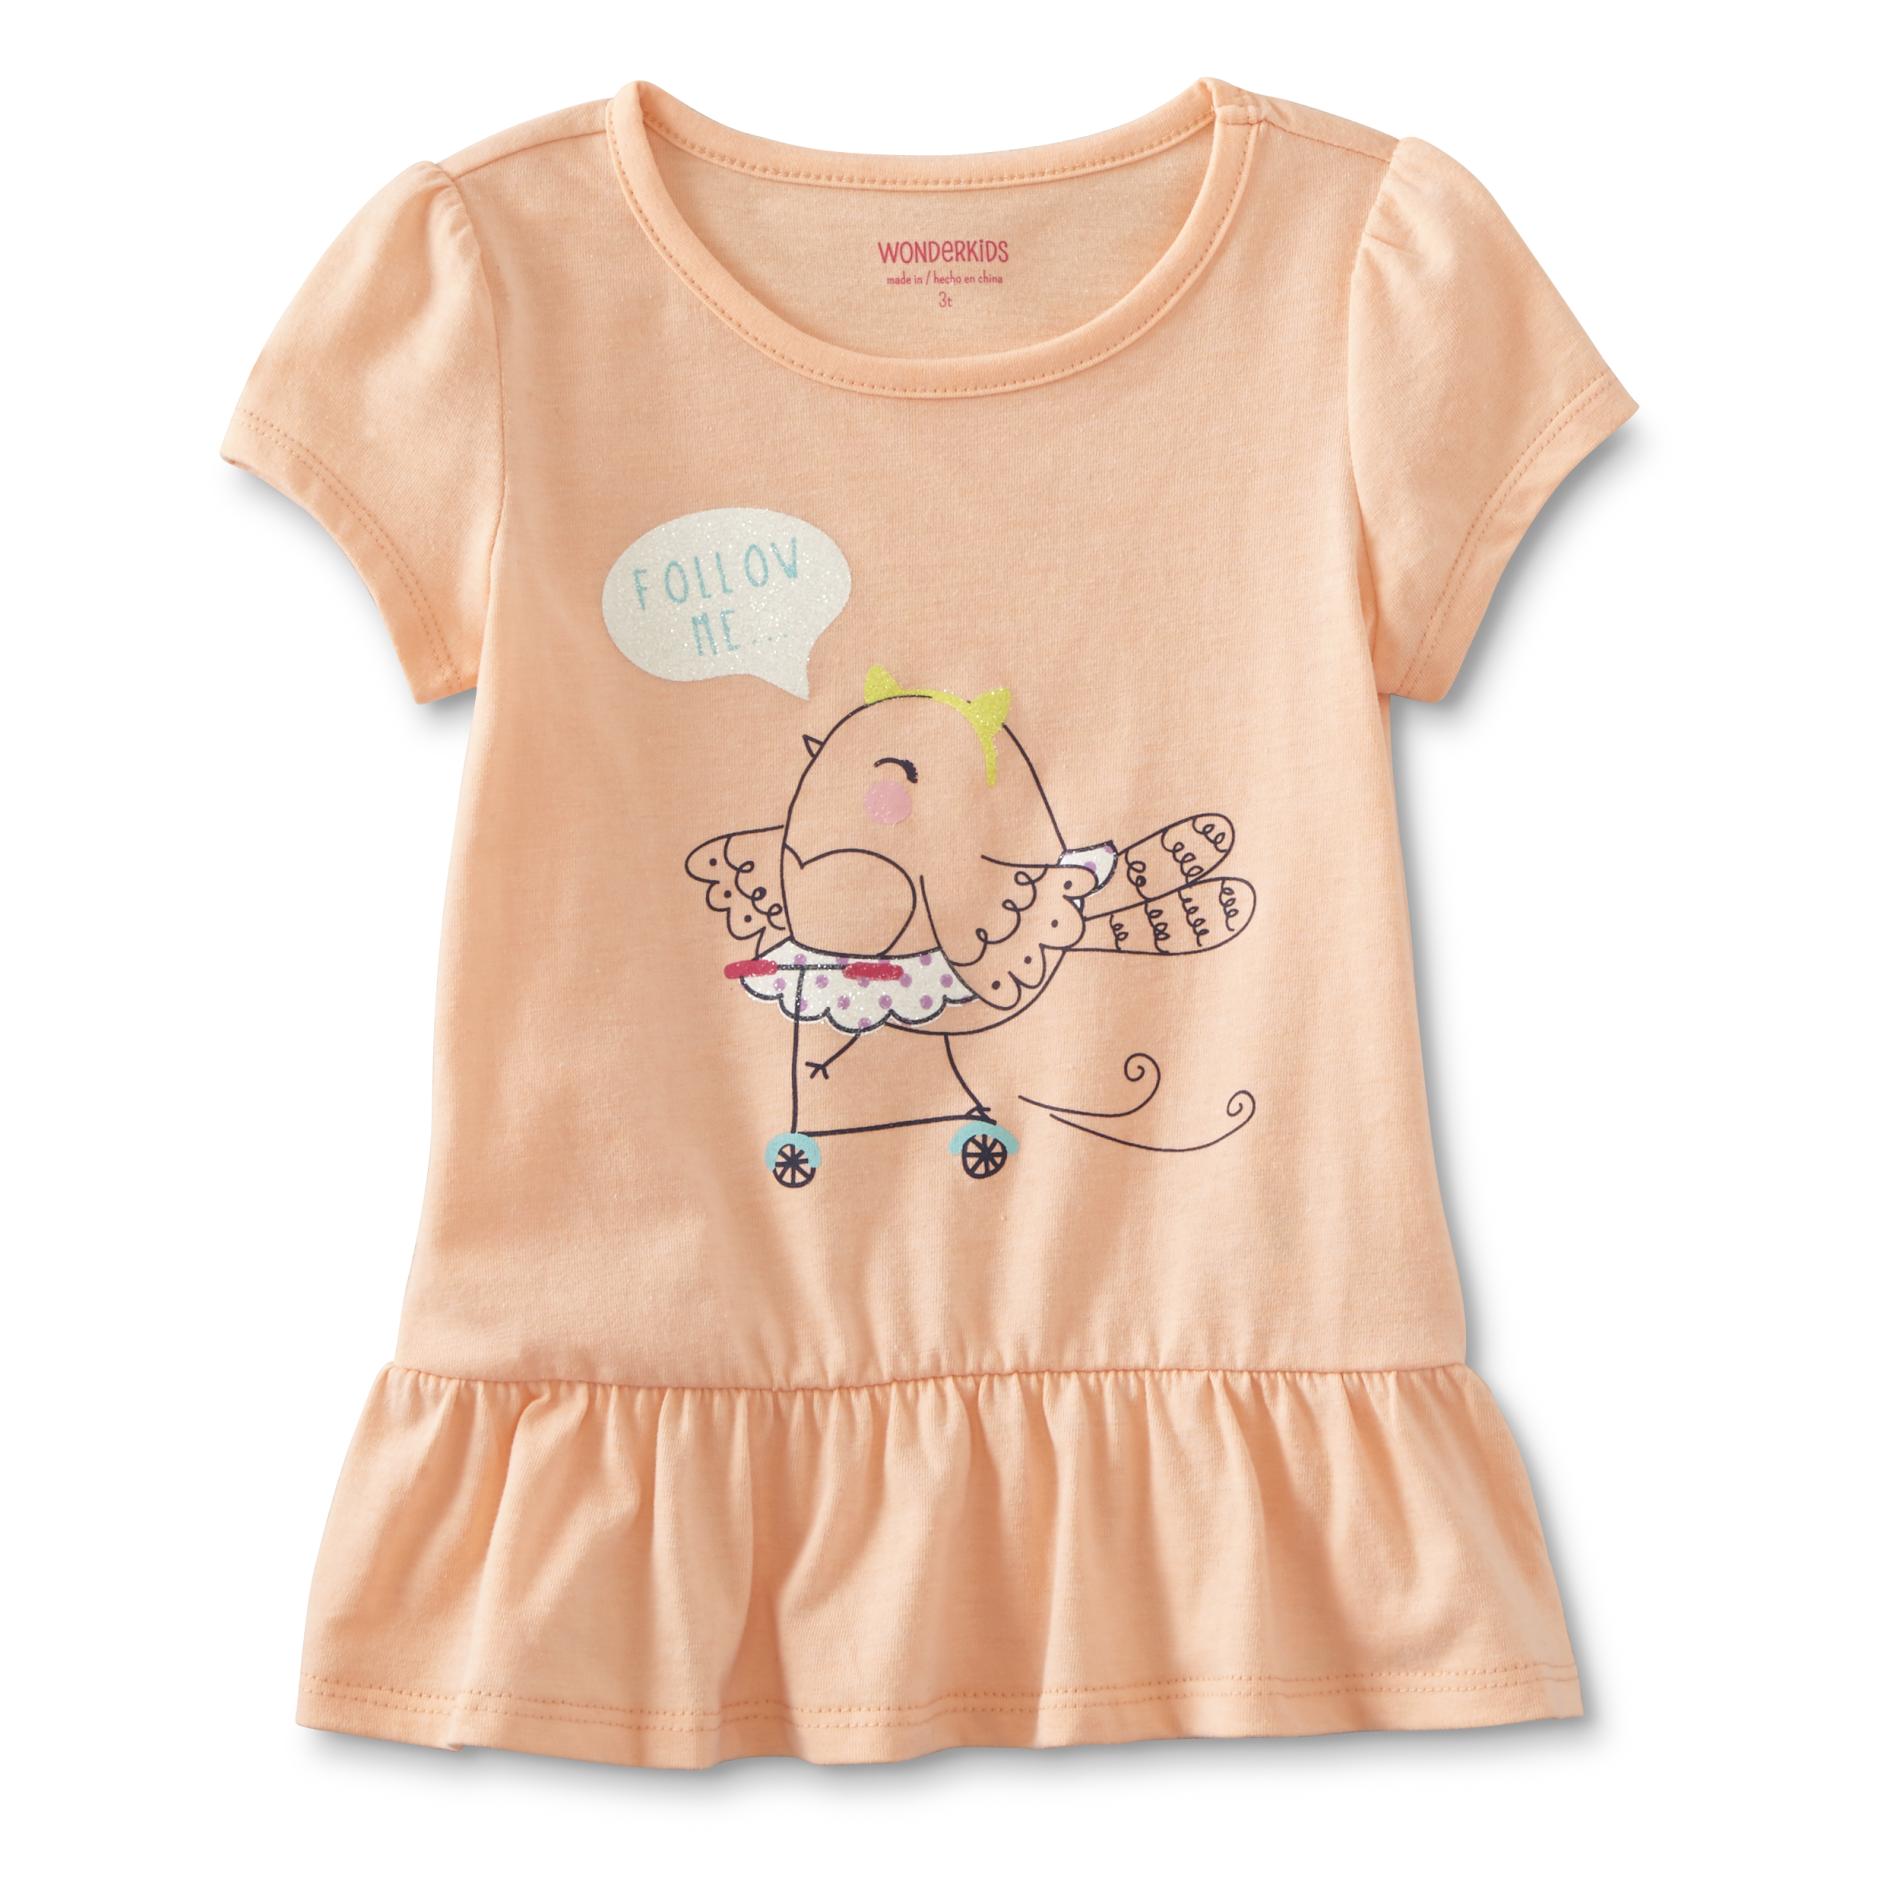 WonderKids Infant & Toddler Girls' Graphic T-Shirt - Bird